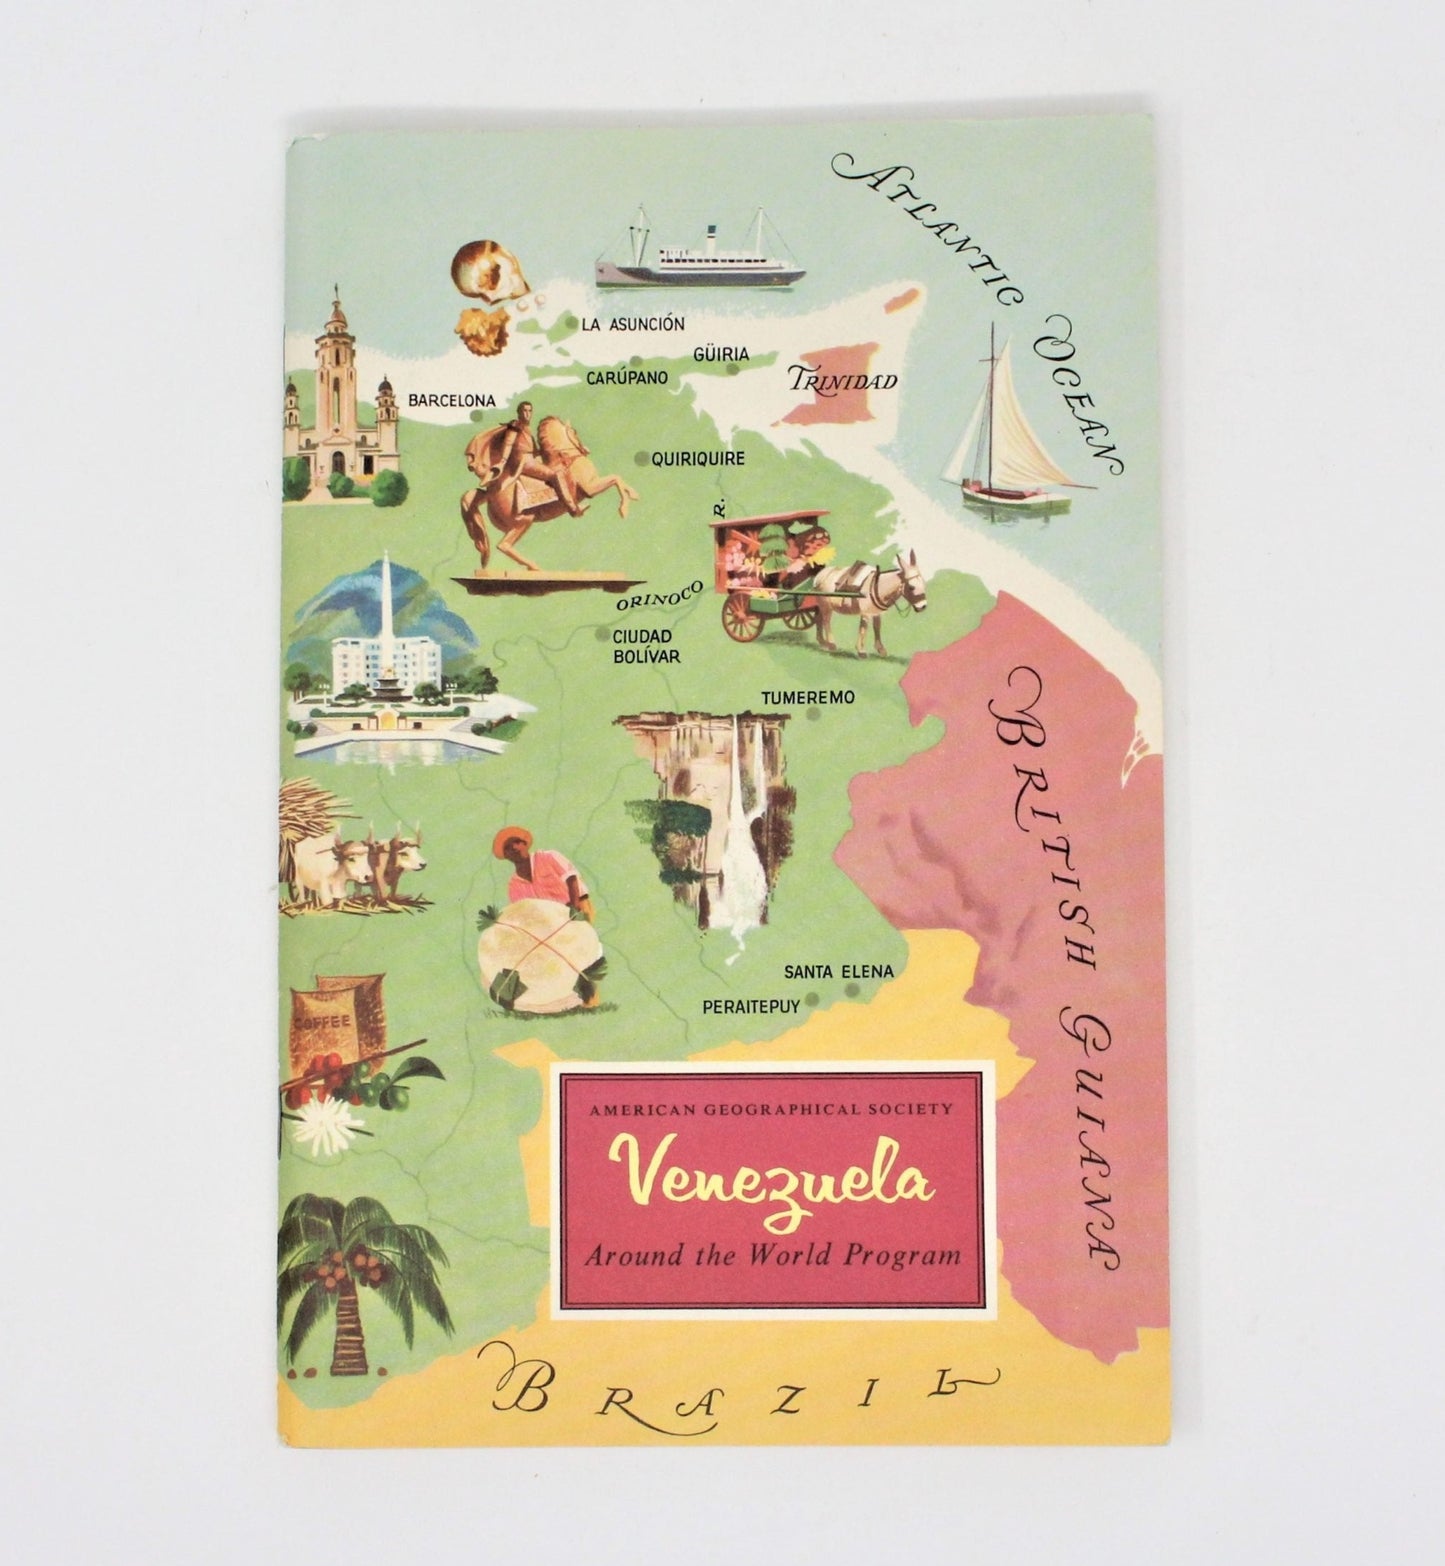 Travel Book, Geographical Society Around the World, Venezuela, 1959